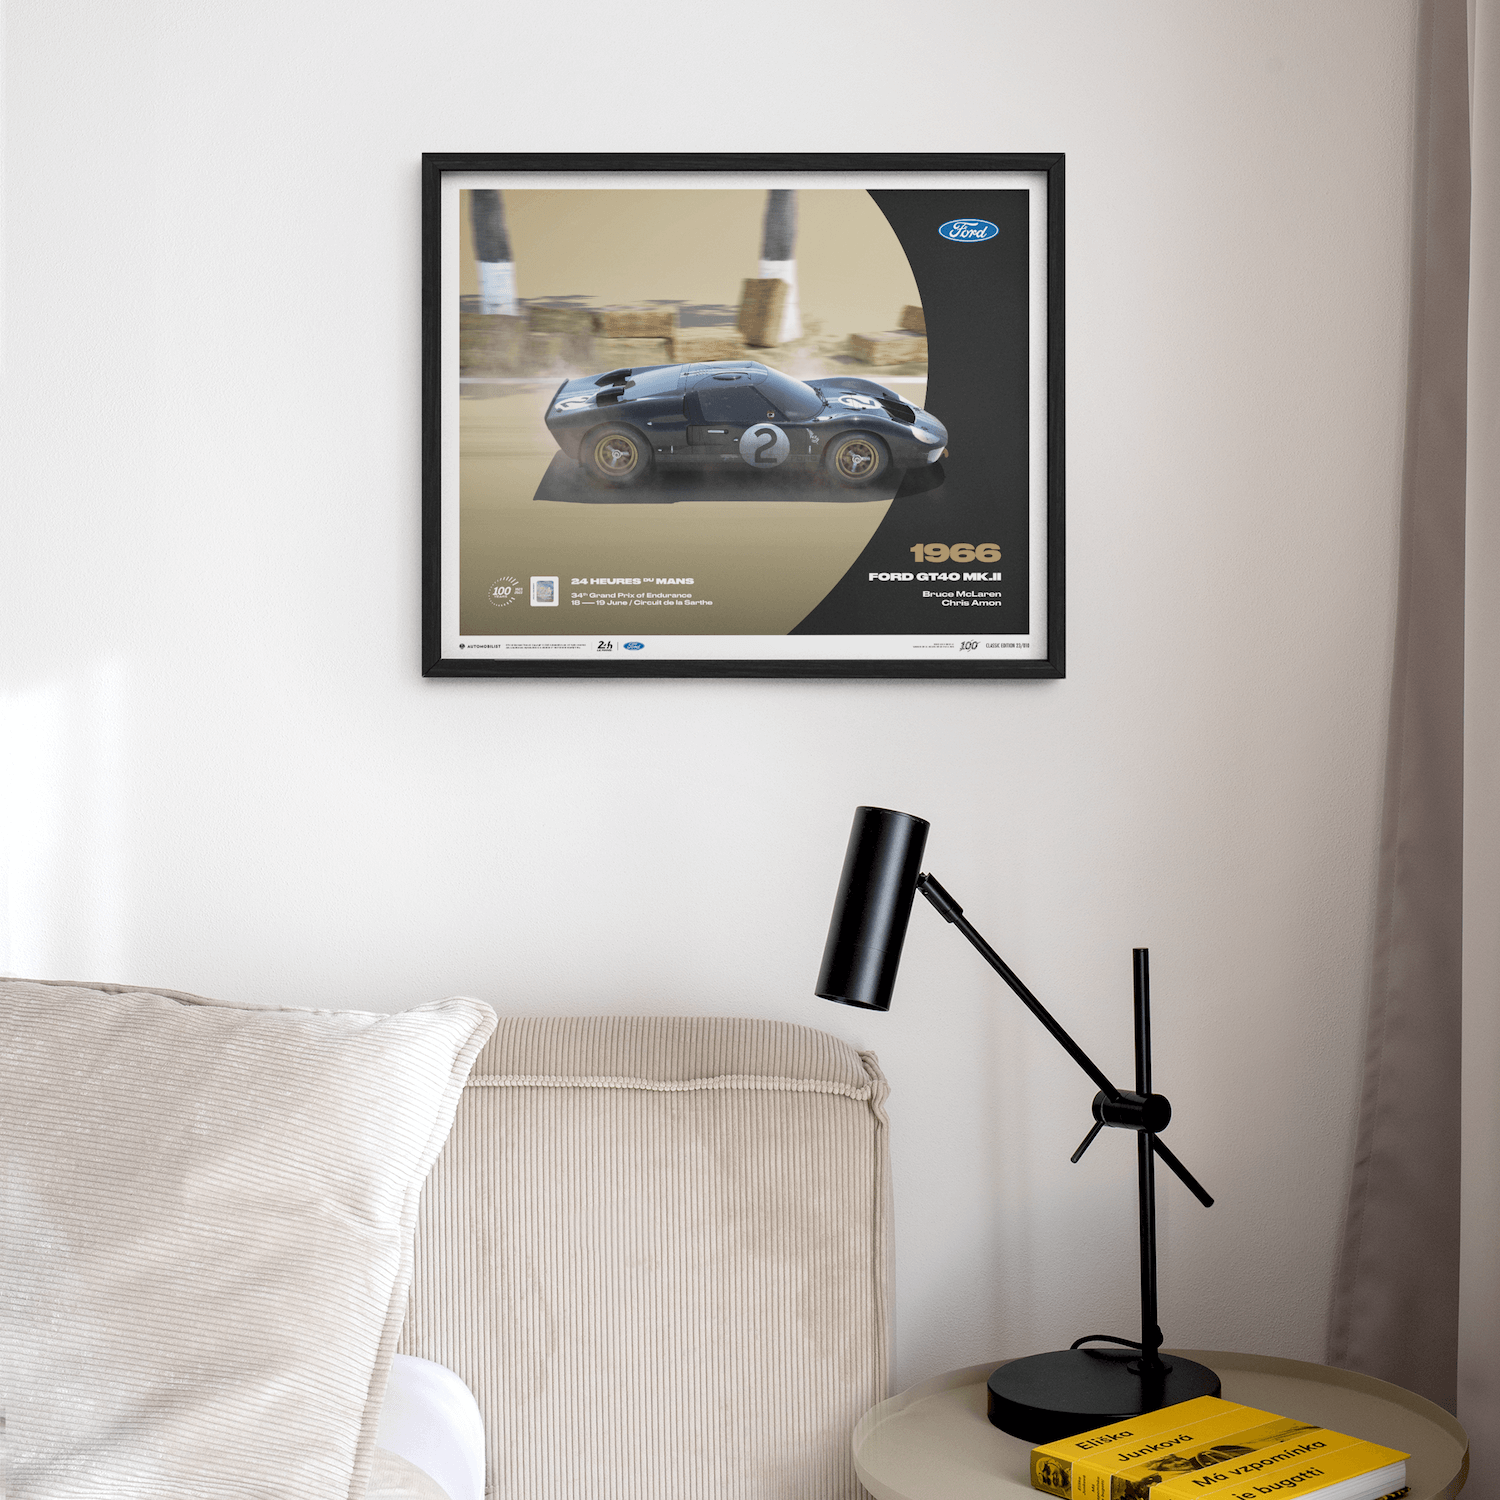 Ford GT40 Mk.II - 24h Le Mans - 100th Anniversary - 1966